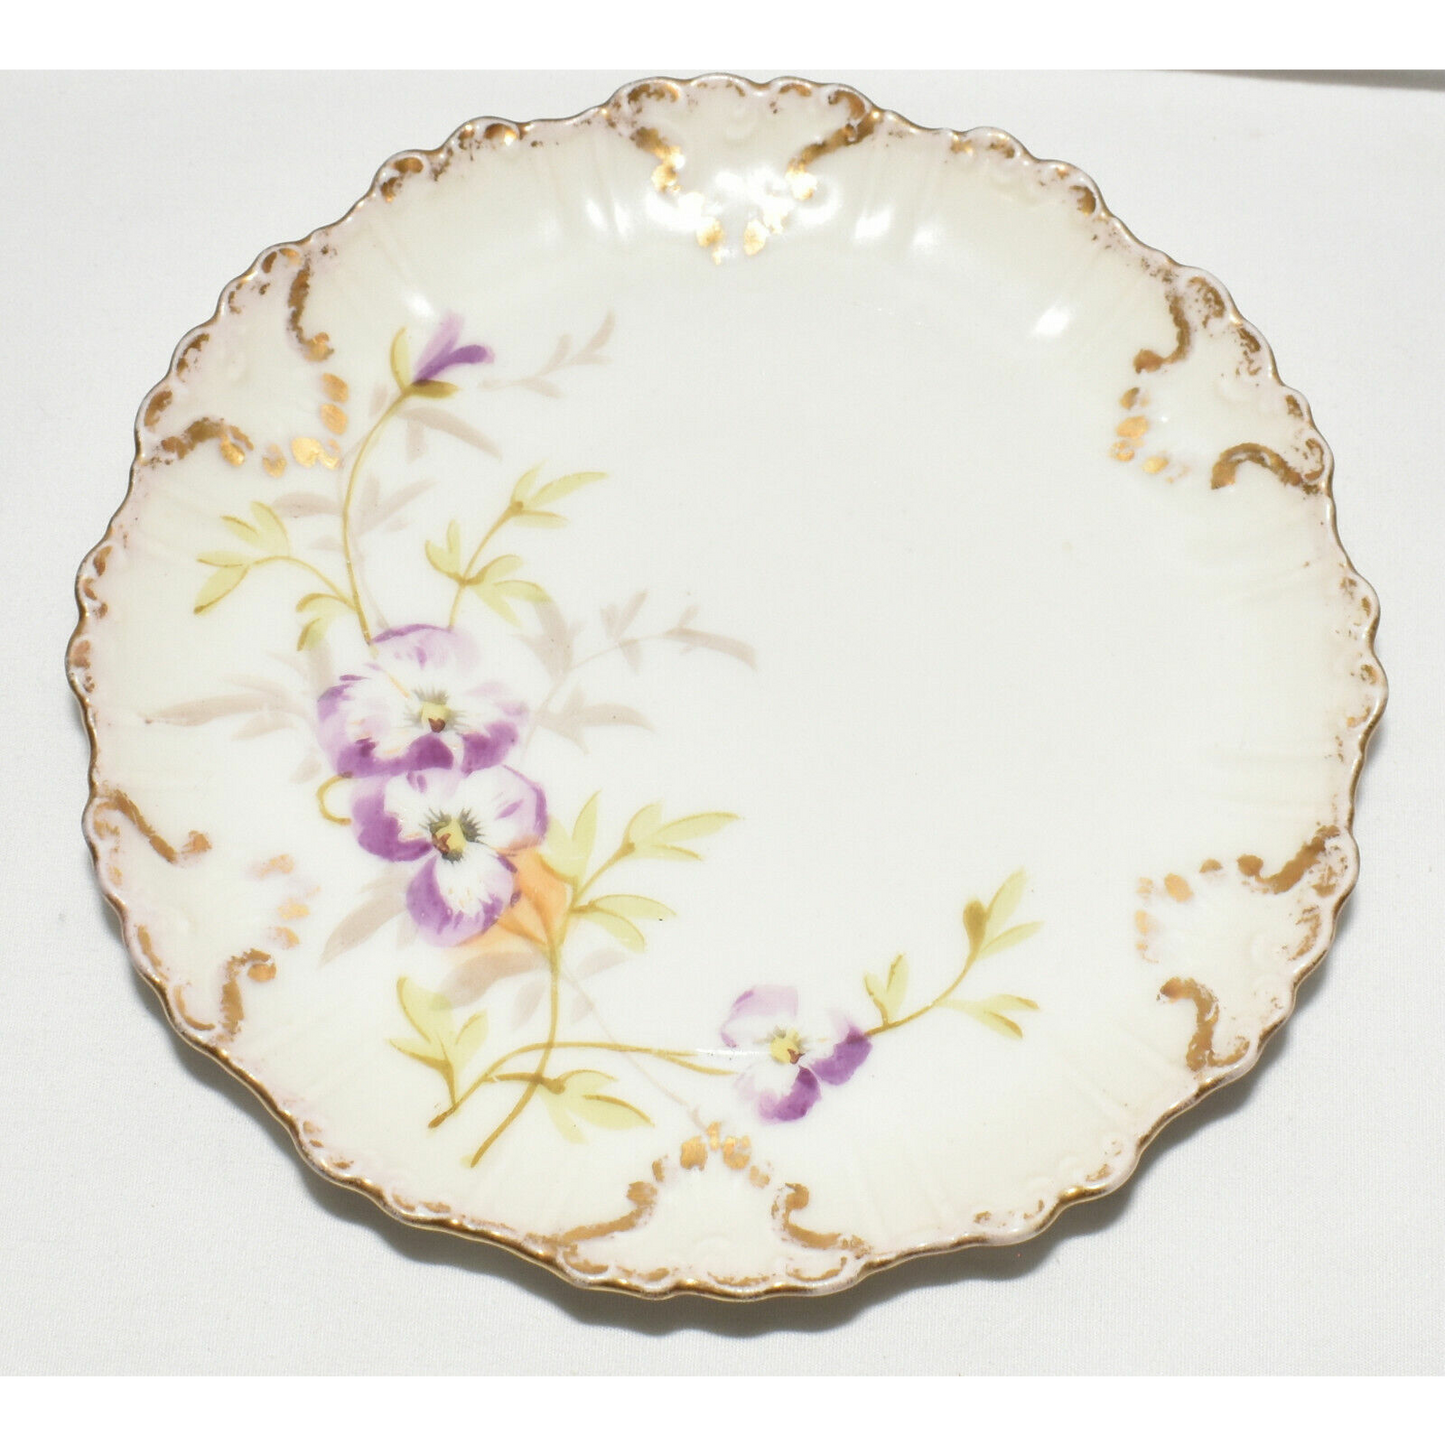 Antique Limoges France 6" Bread Butter Plate Hand Painted Porcelain Plate c.1900